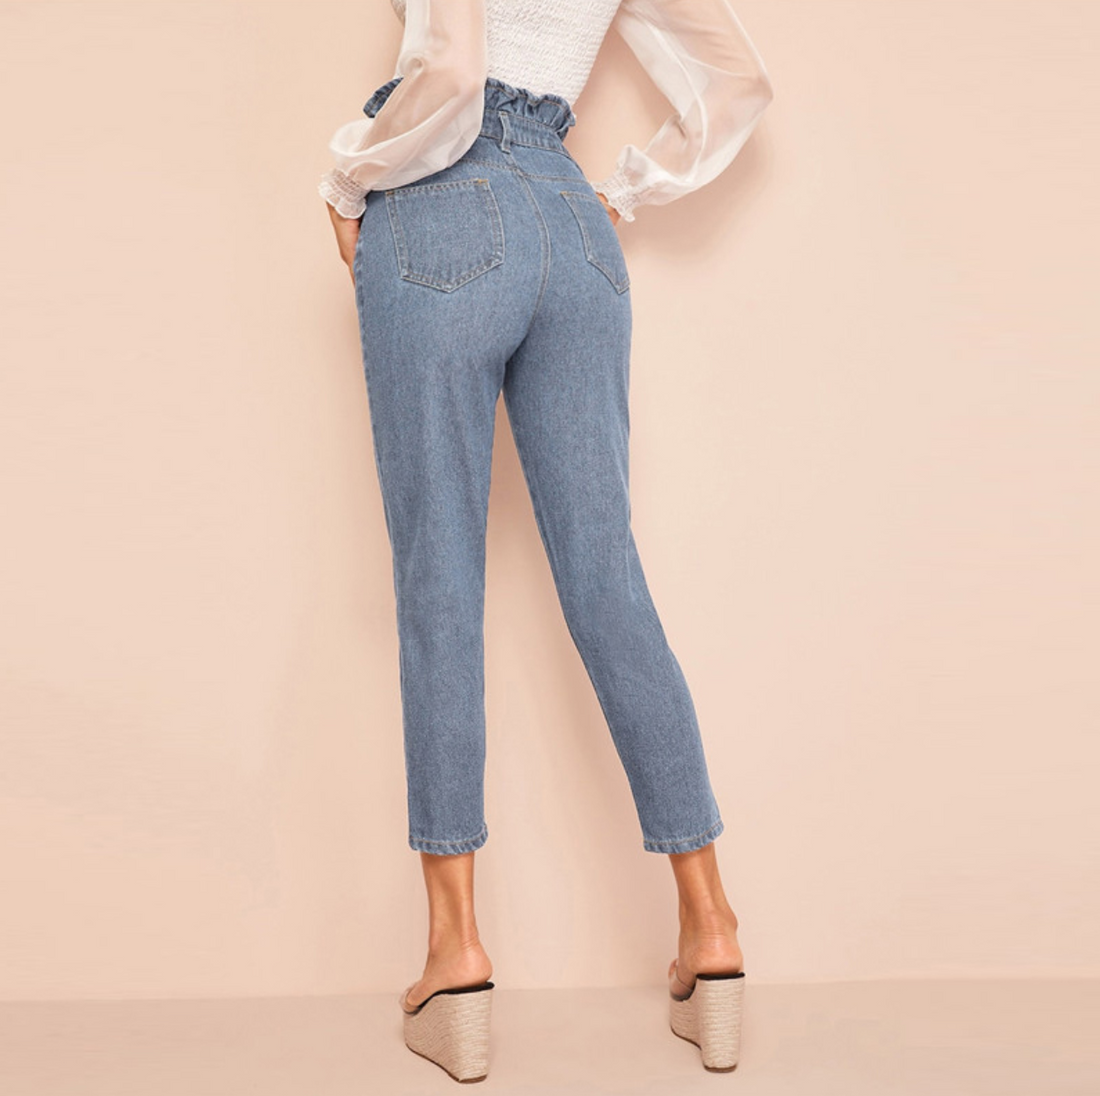 Women's Spring/Summer High-Waist Skinny Jeans